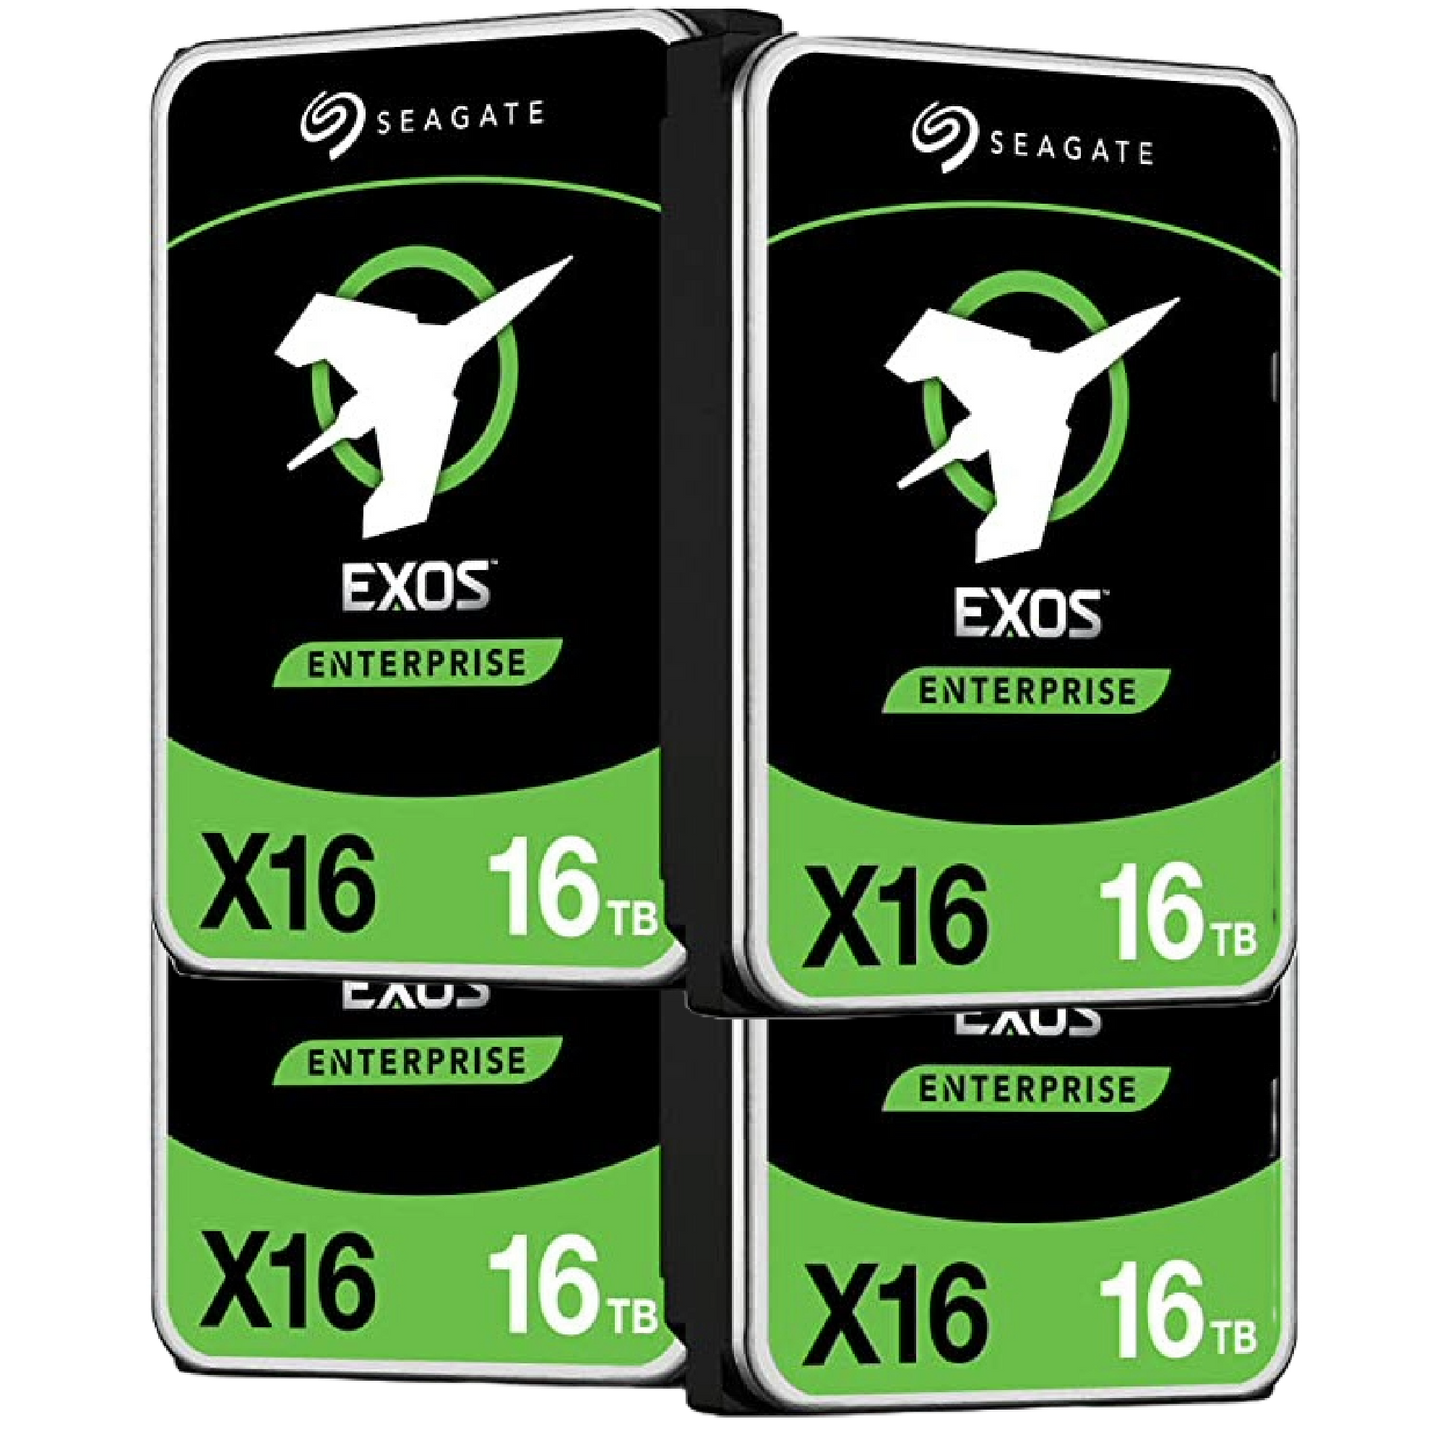 4 Pack Seagate EXOS X16 16TB ST16000NM001G ENTERPRISE 3.5" SATA CMR HARD DRIVE OEM